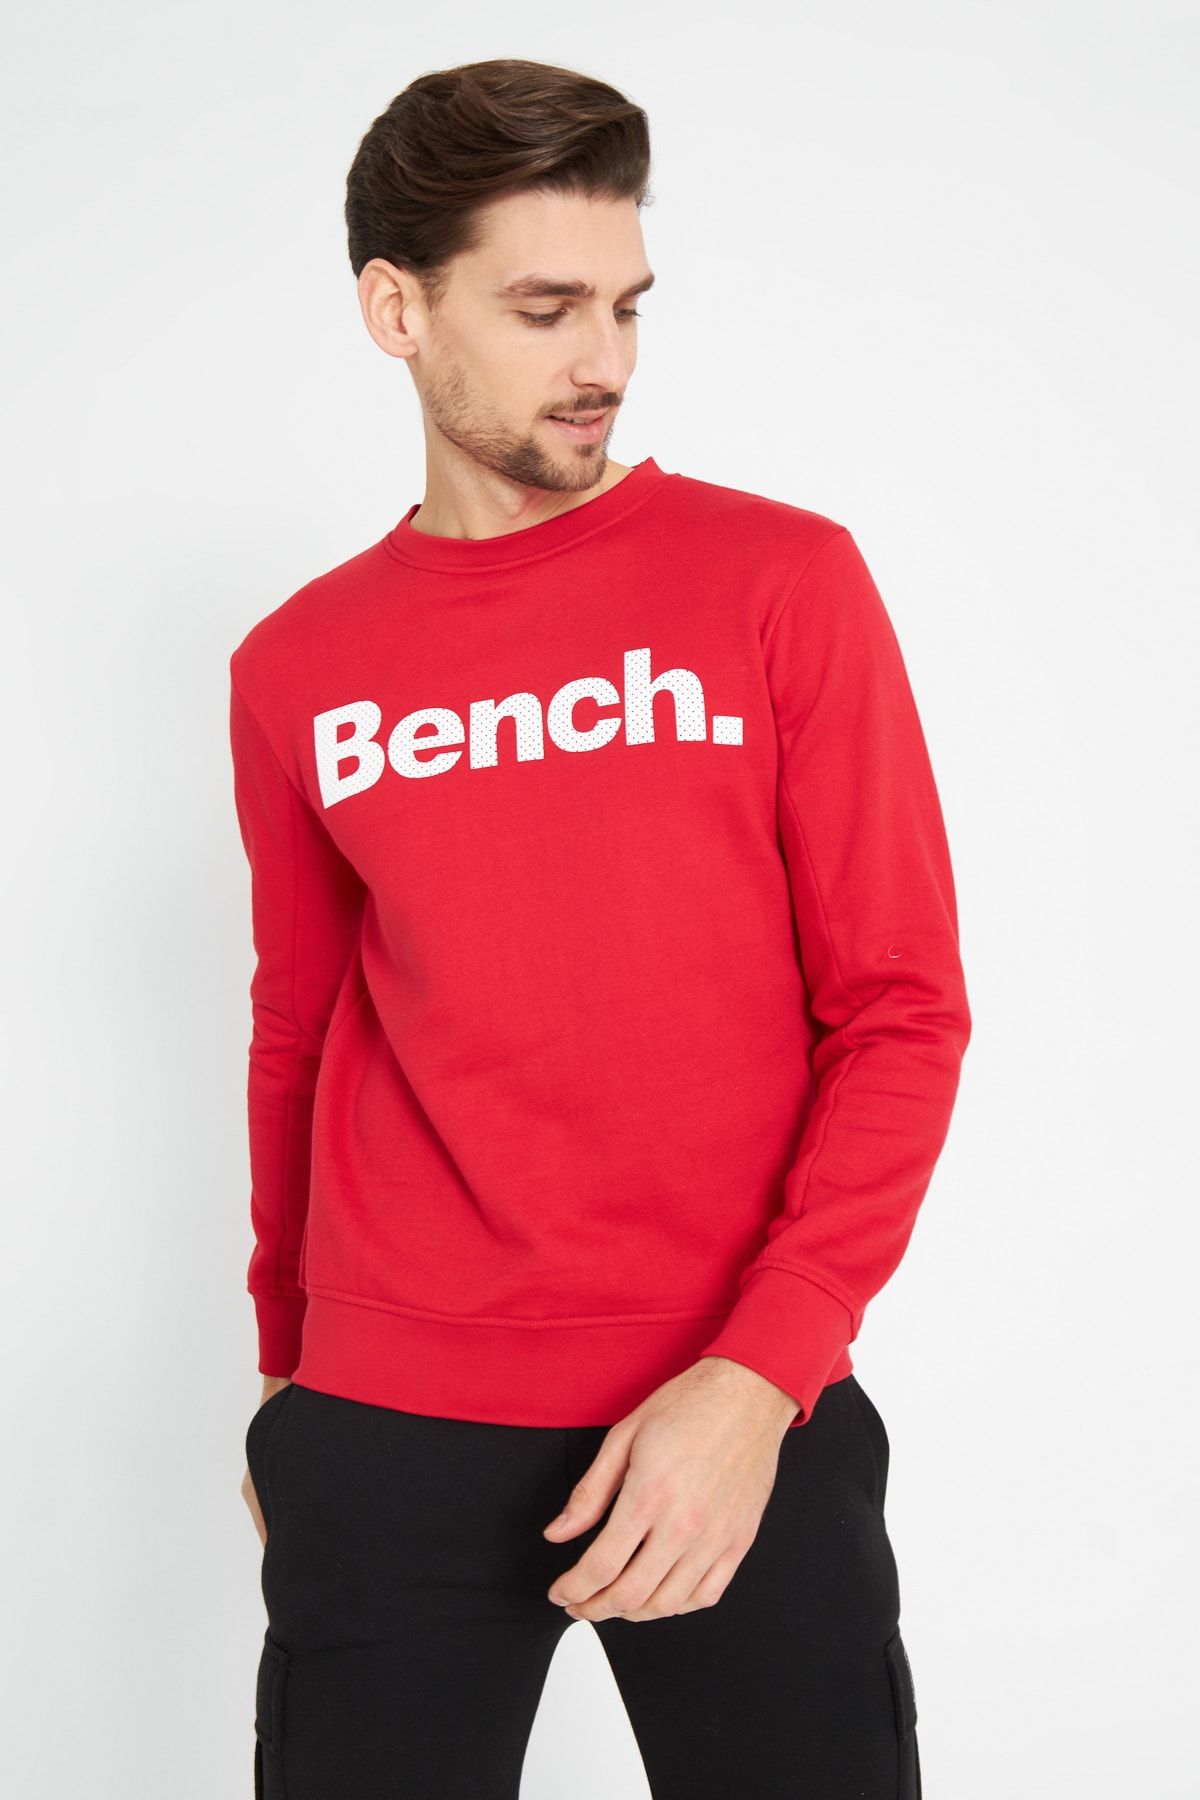 BENCH Sweatshirt - Red - Regular fit - Trendyol | Sweatshirts